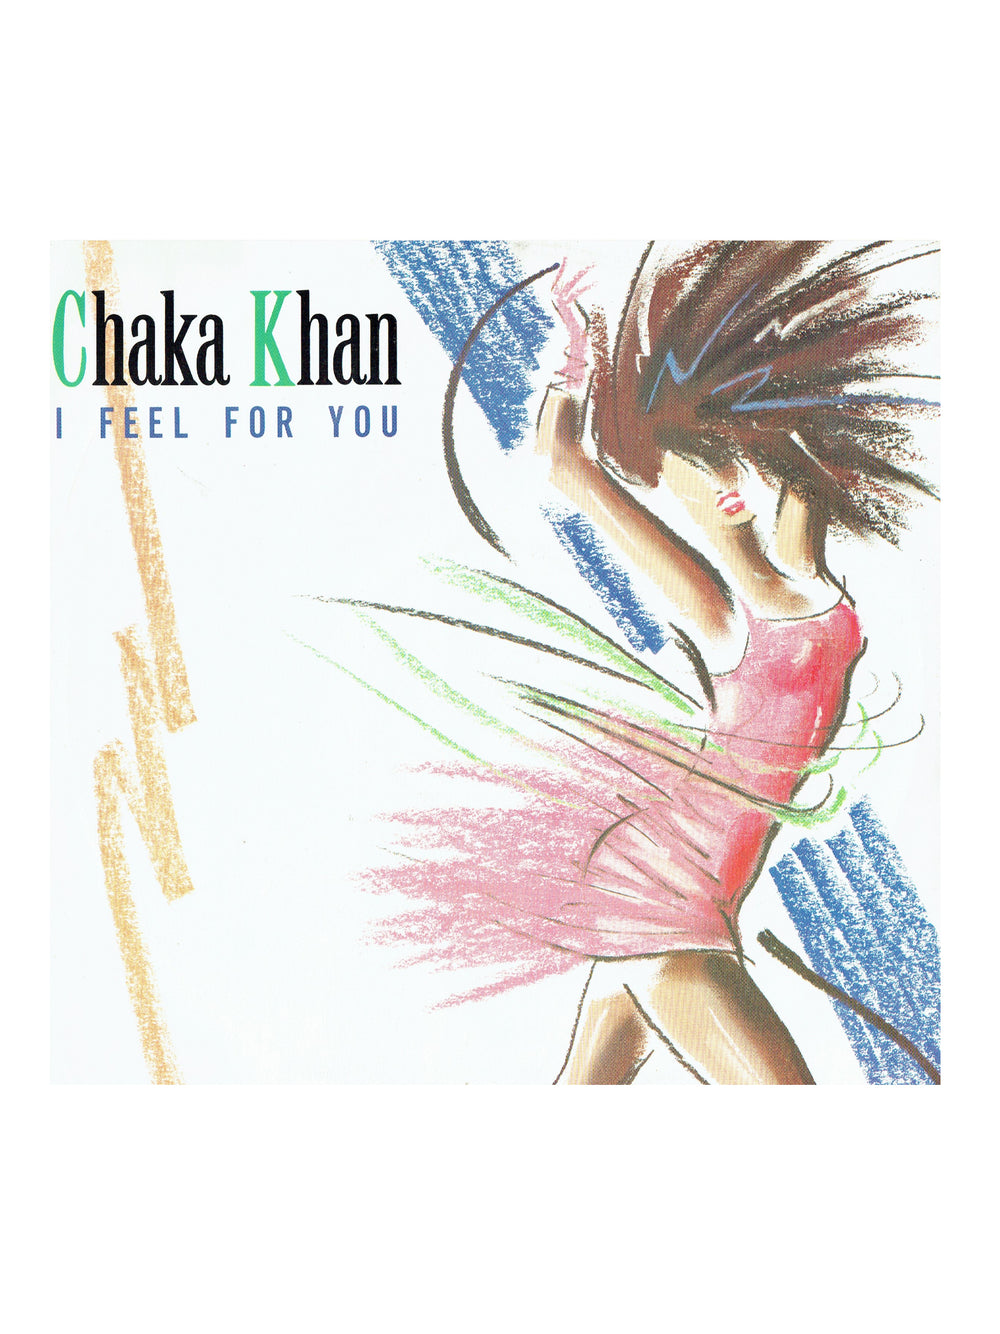 Prince – Chaka Khan I Feel For You Remix Vinyl 12" UK Preloved: 1984